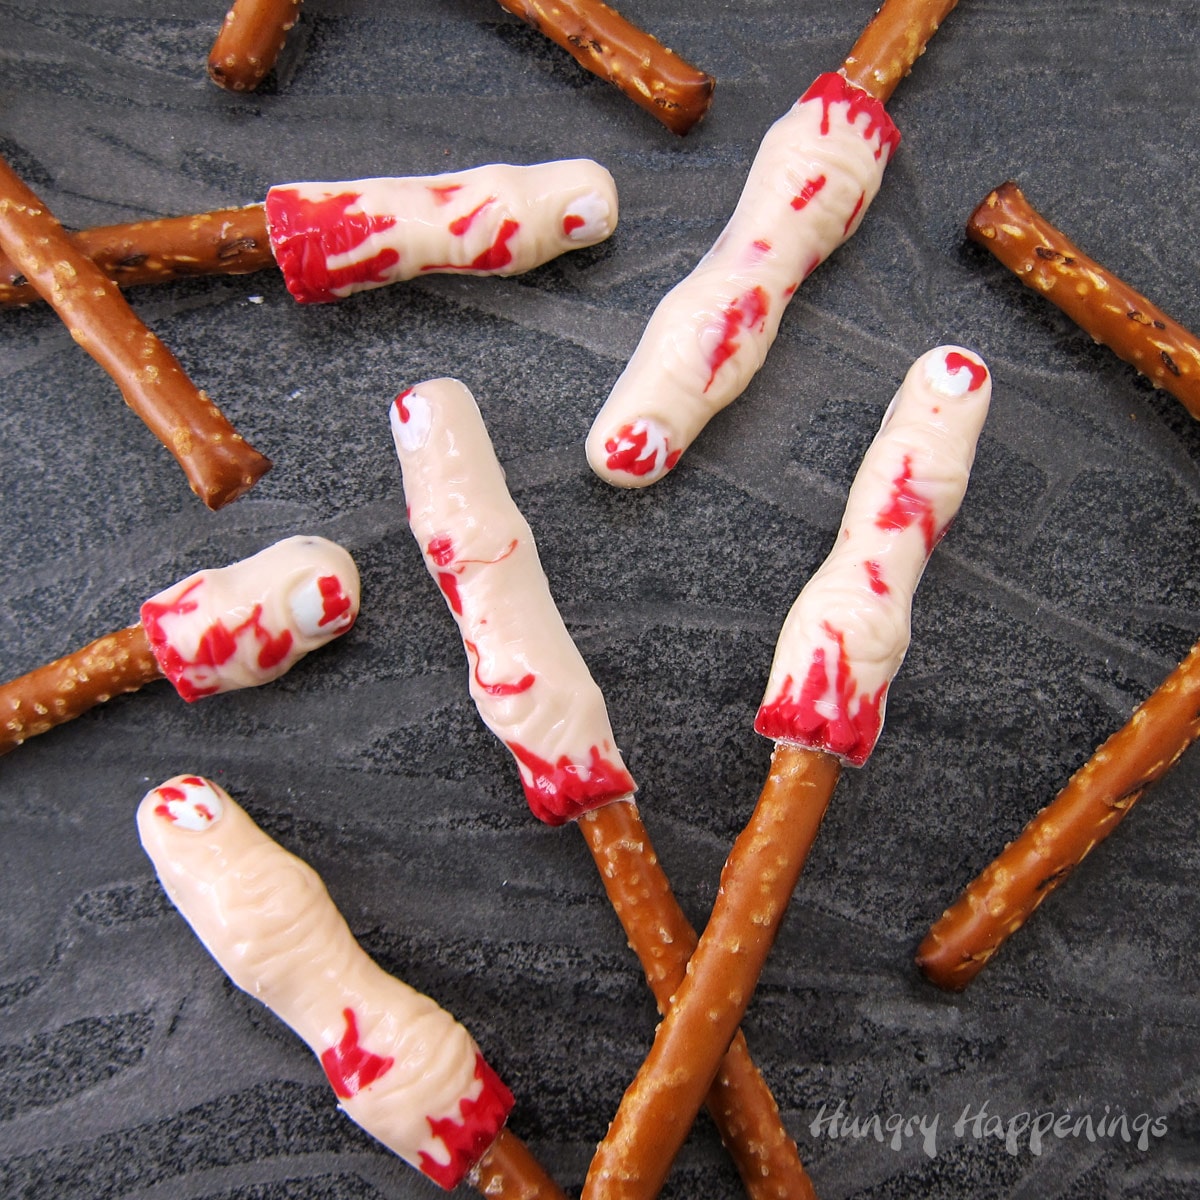 bloody white chocolate fingers on pretzel sticks. 